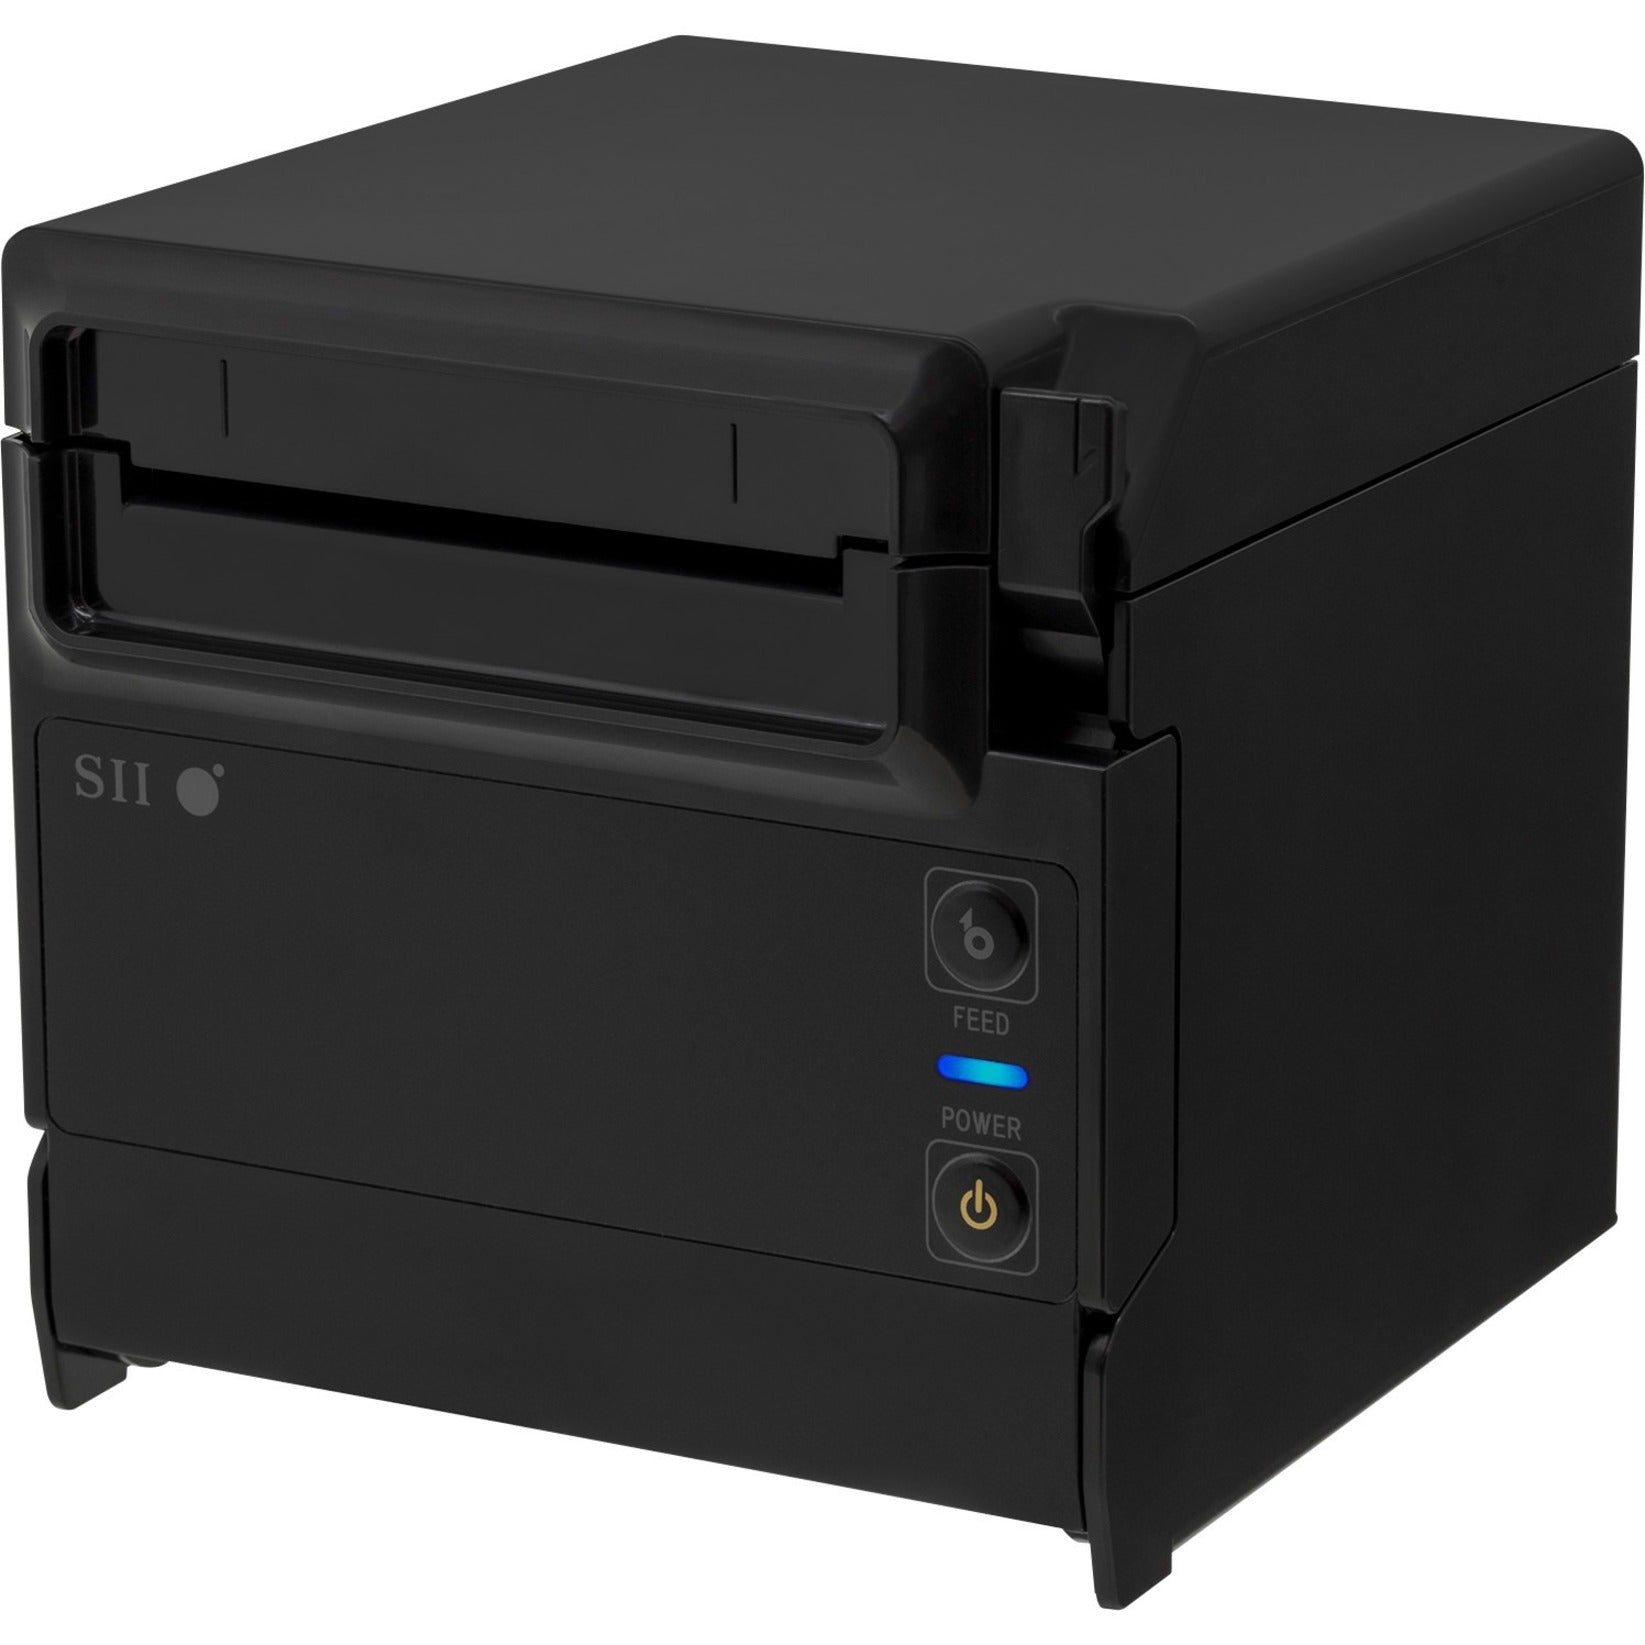 Seiko RP-F10-K27J1-30C3 RP-F10 Series & 4.3 inch Color TFT Display Direct Thermal Printer, Compact, Monochrome, 203dpi